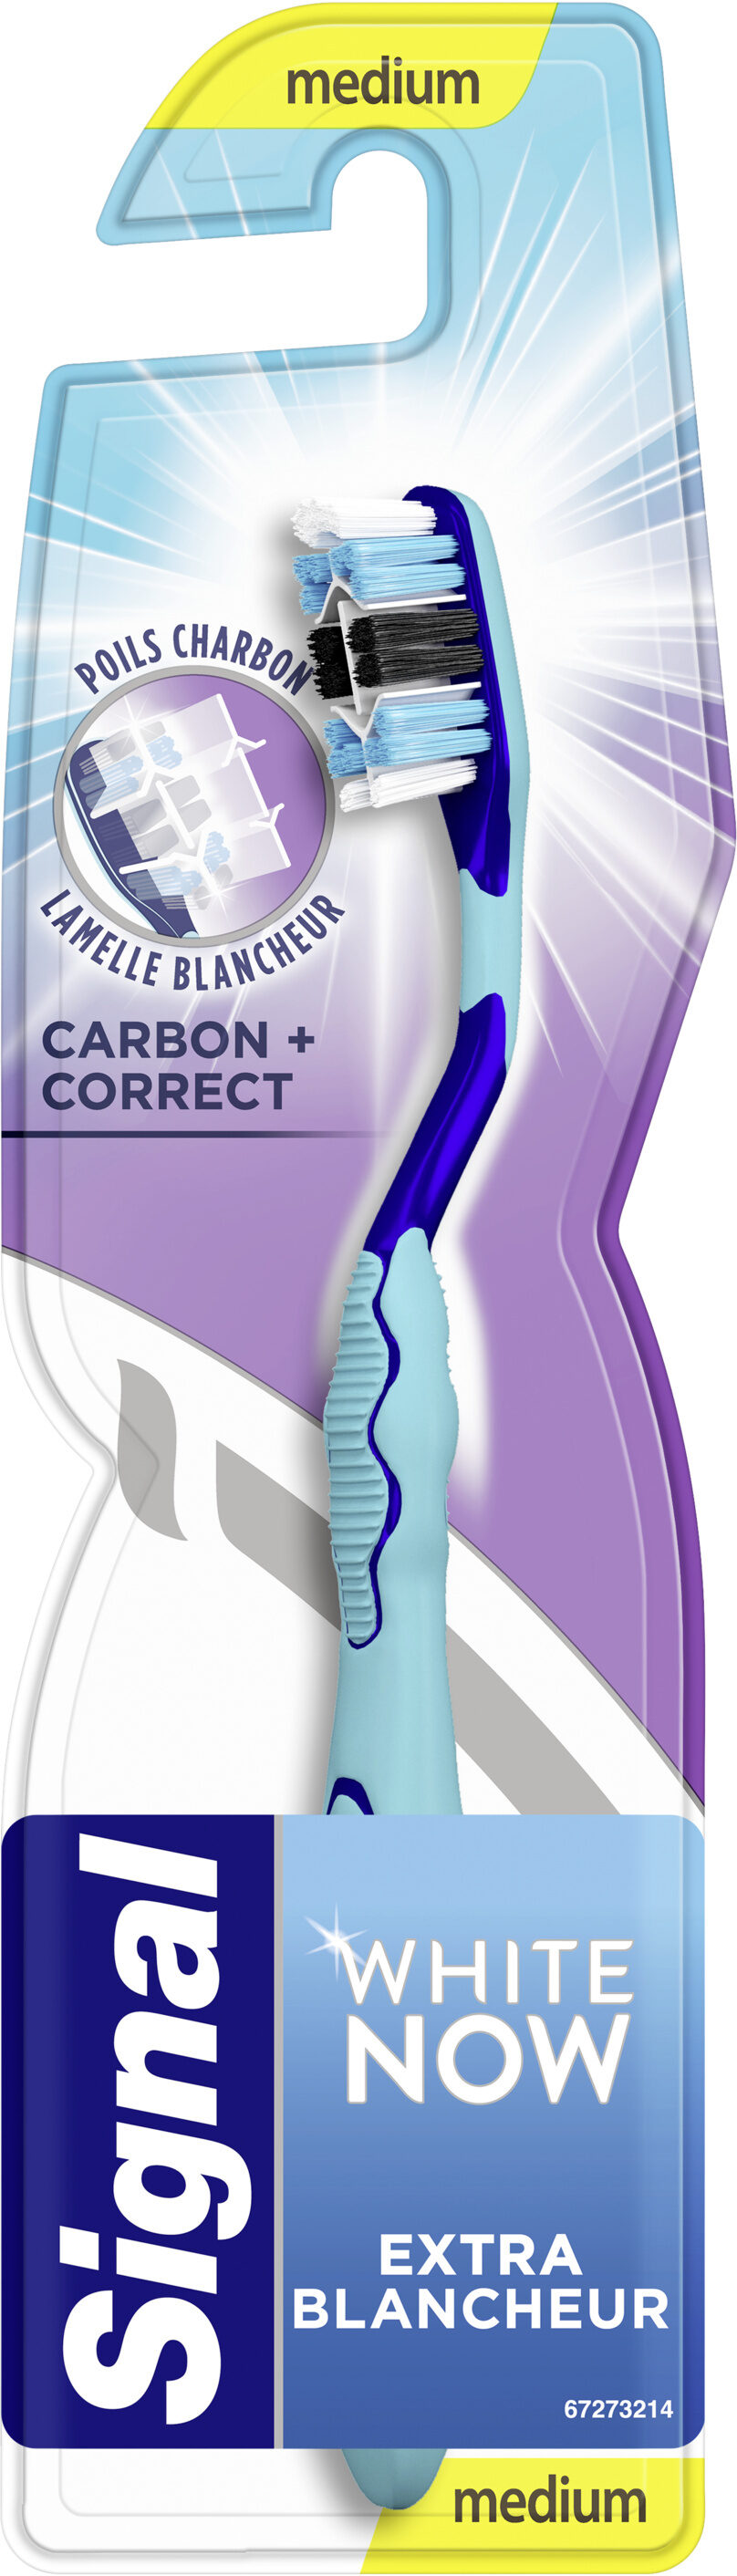 Signal White Now Brosse à Dents Carbon Correct Medium x1 - Product - fr